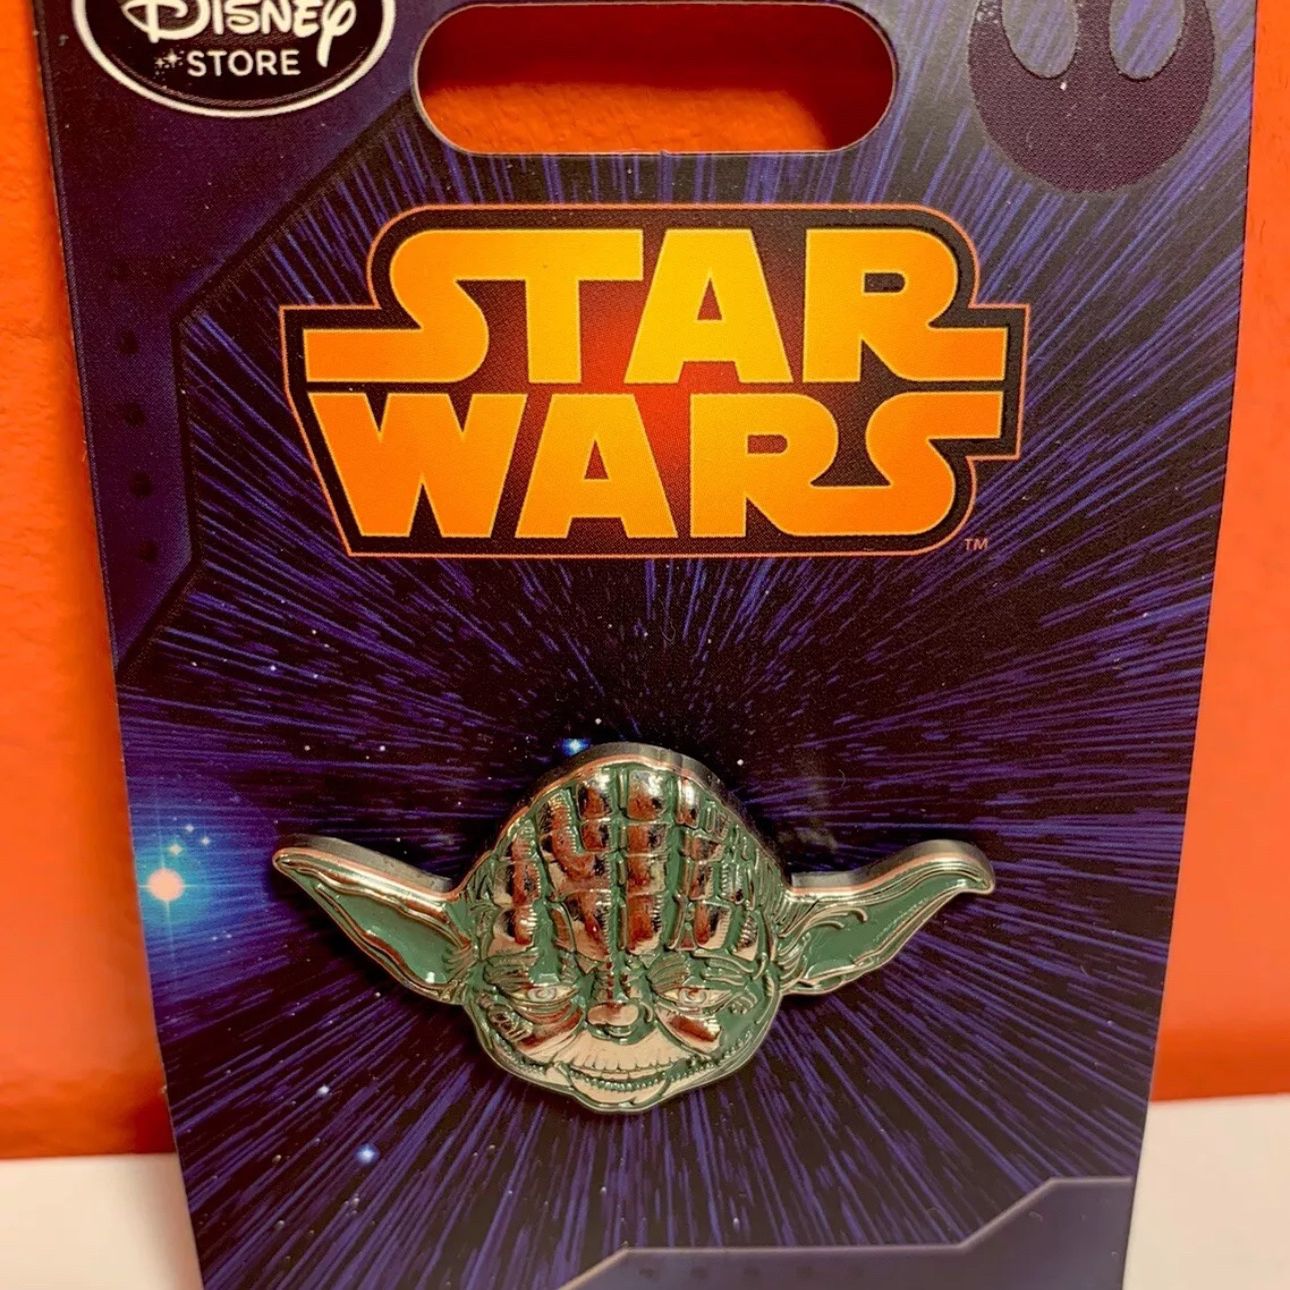 STAR WARS Yoda Head Pin Series 2 • Rare Retired Disney Store Exclusive 2014 NEW